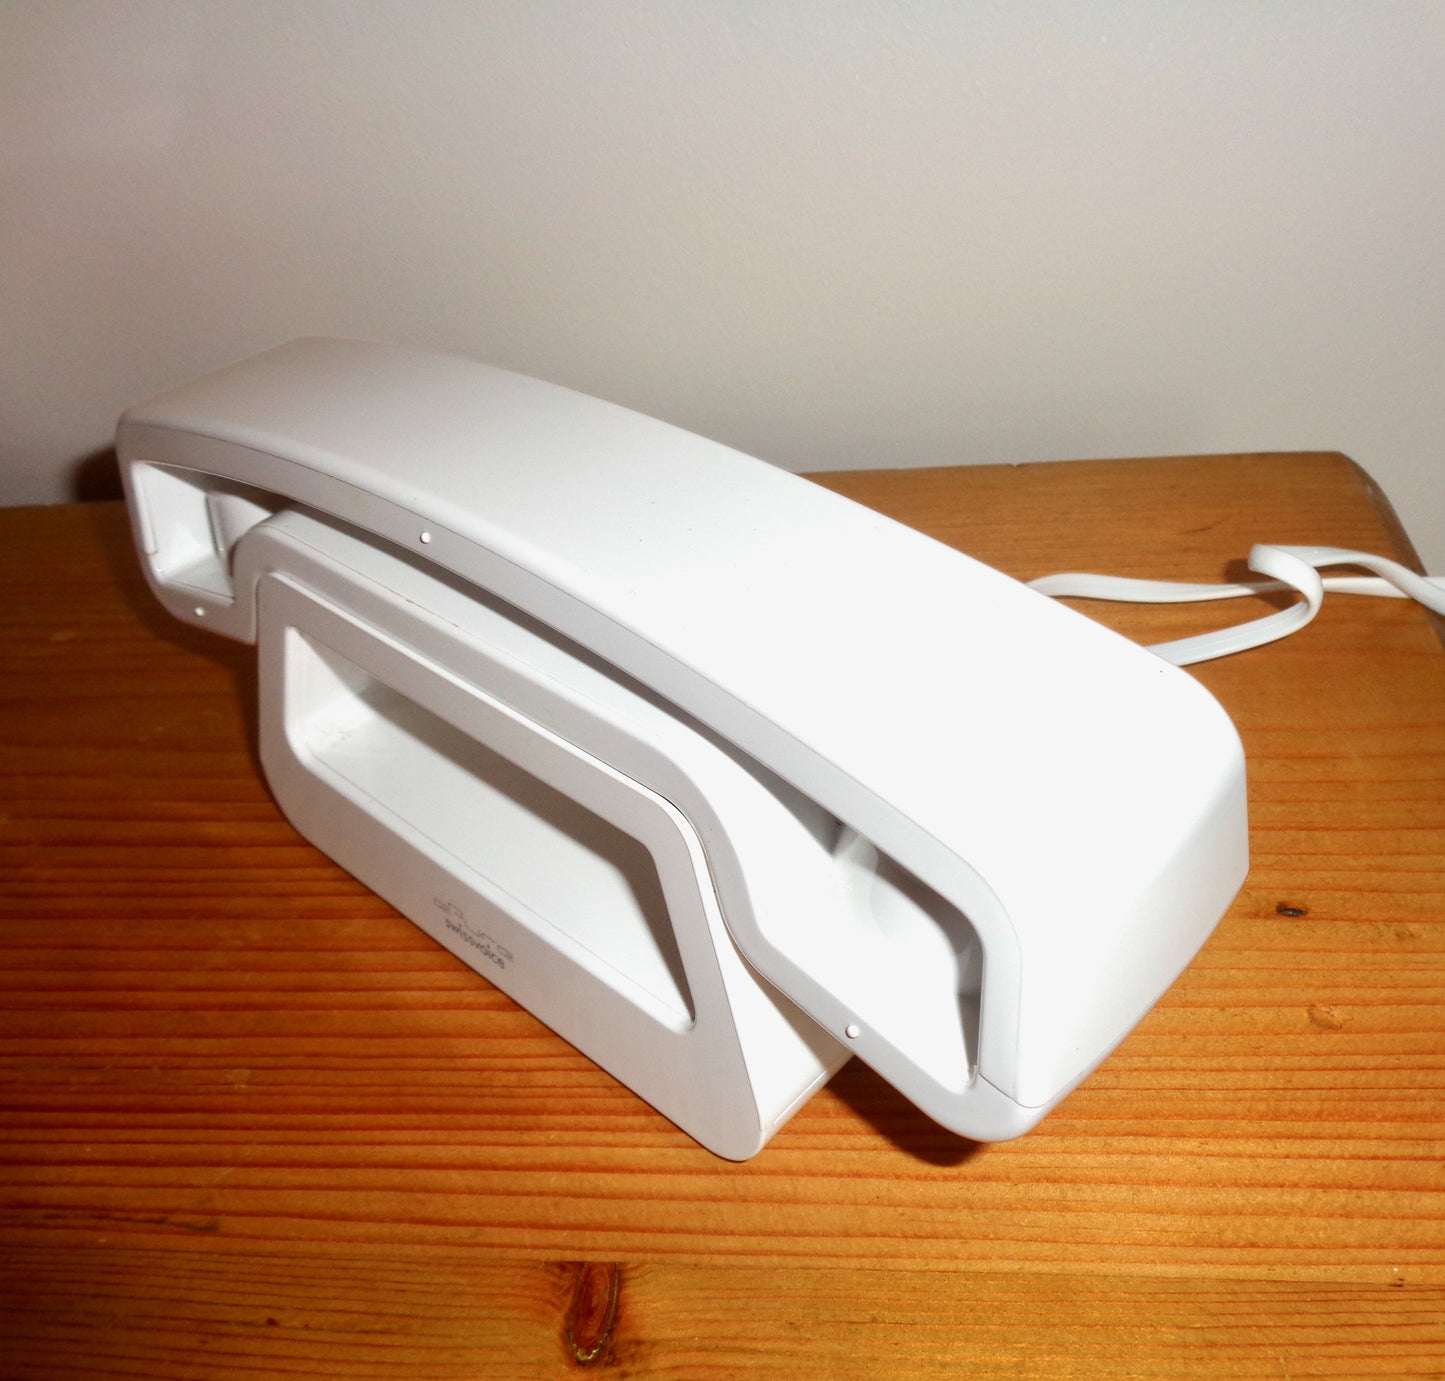 Original Swissvoice Epure DECT Cordless Analogue Telephone In White